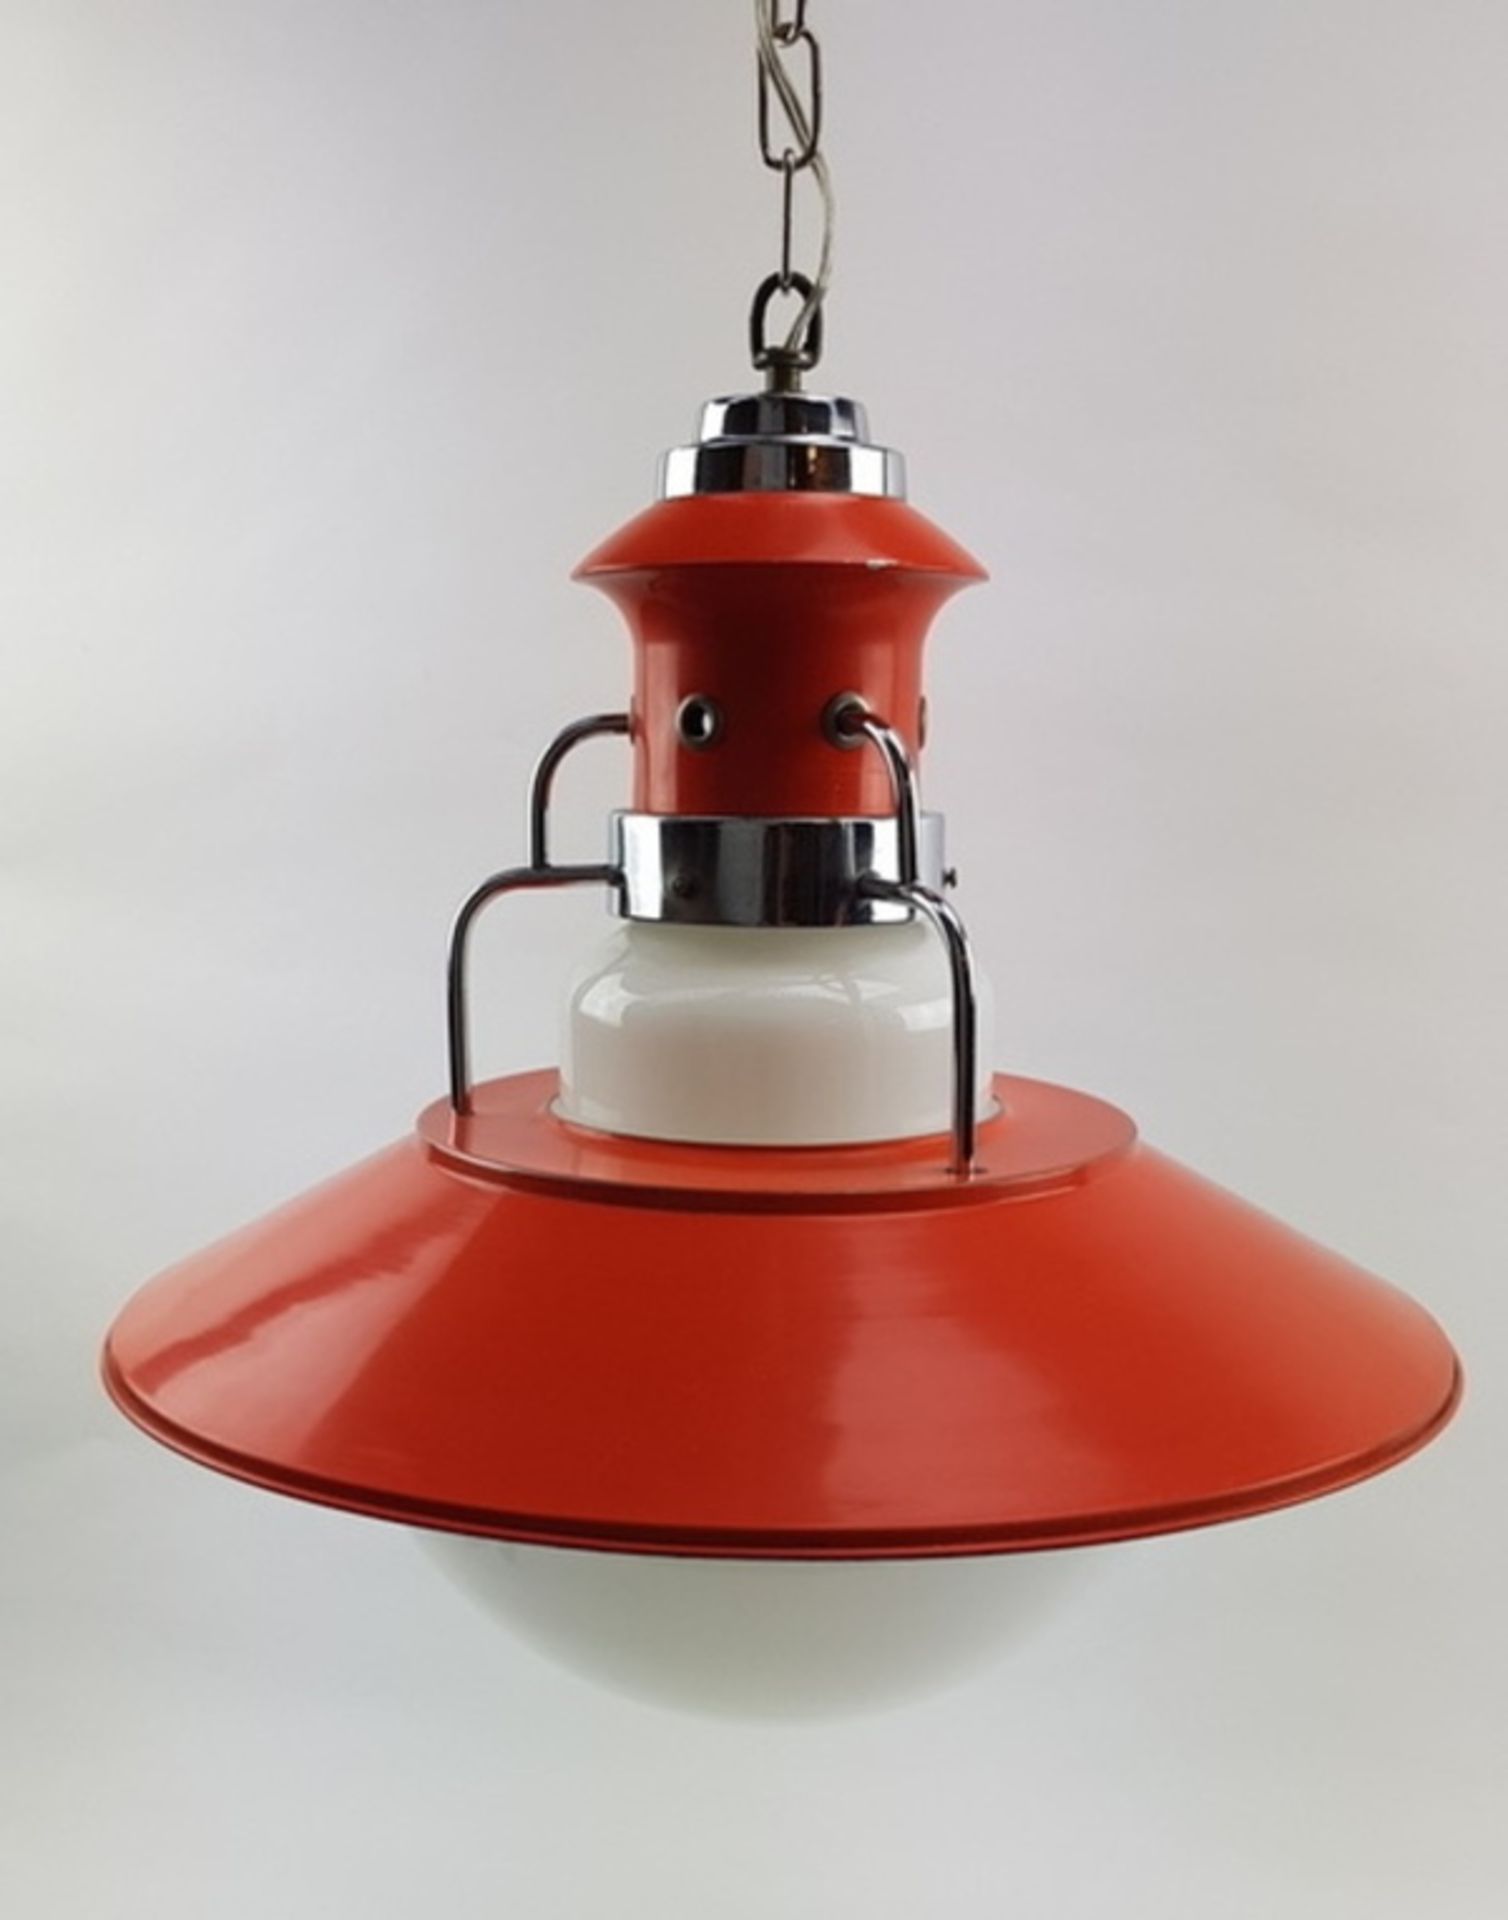 (Design) Hanglamp model scheepslamp ca. 1970Hanglamp model scheepslamp ca. 1970 Conditie: Good